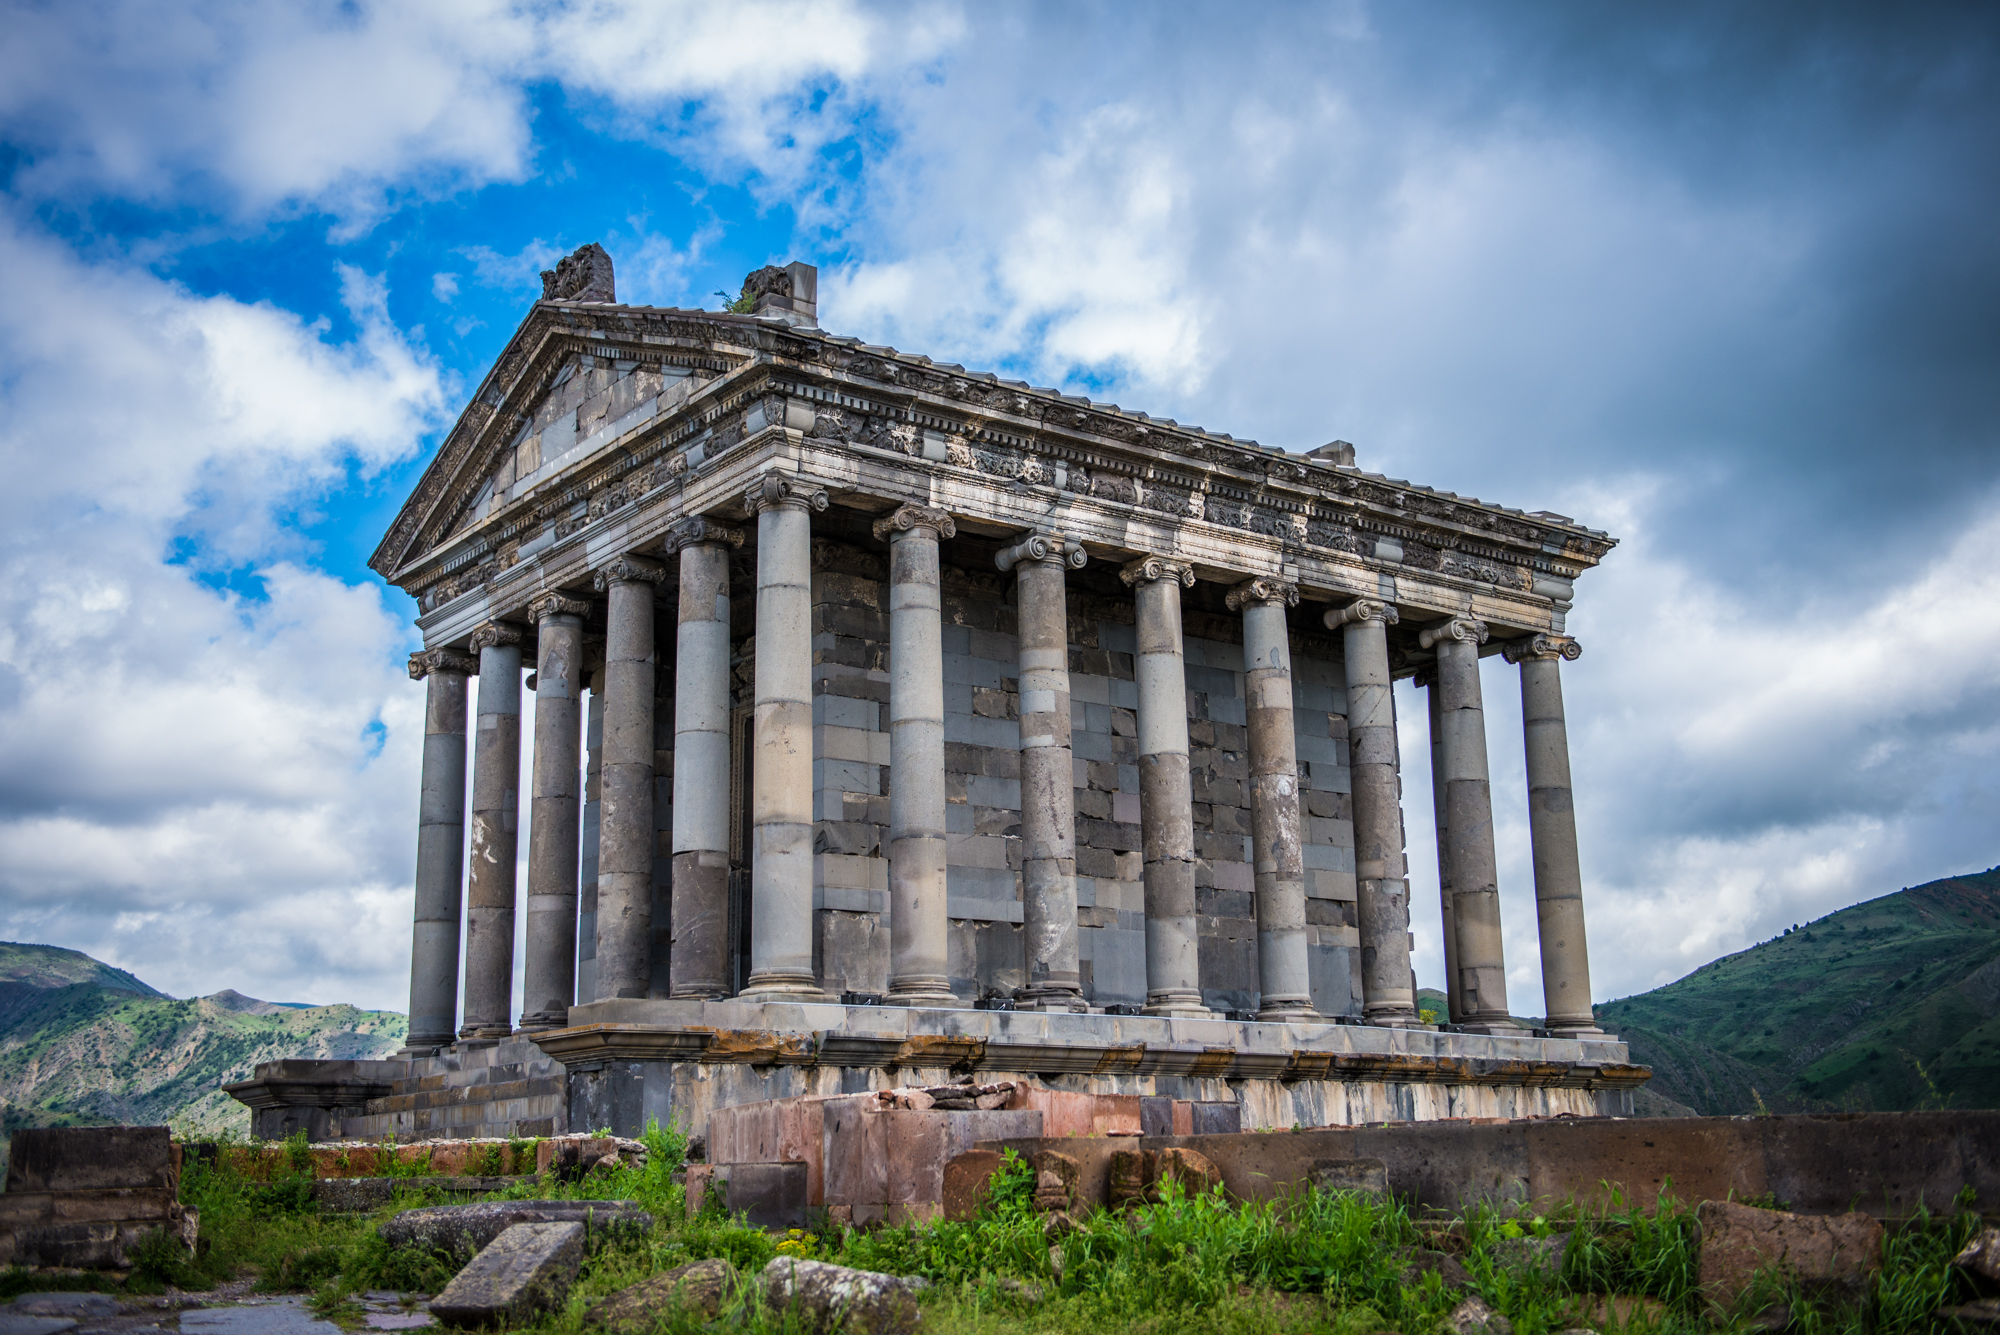 Garni Temple, Armenia